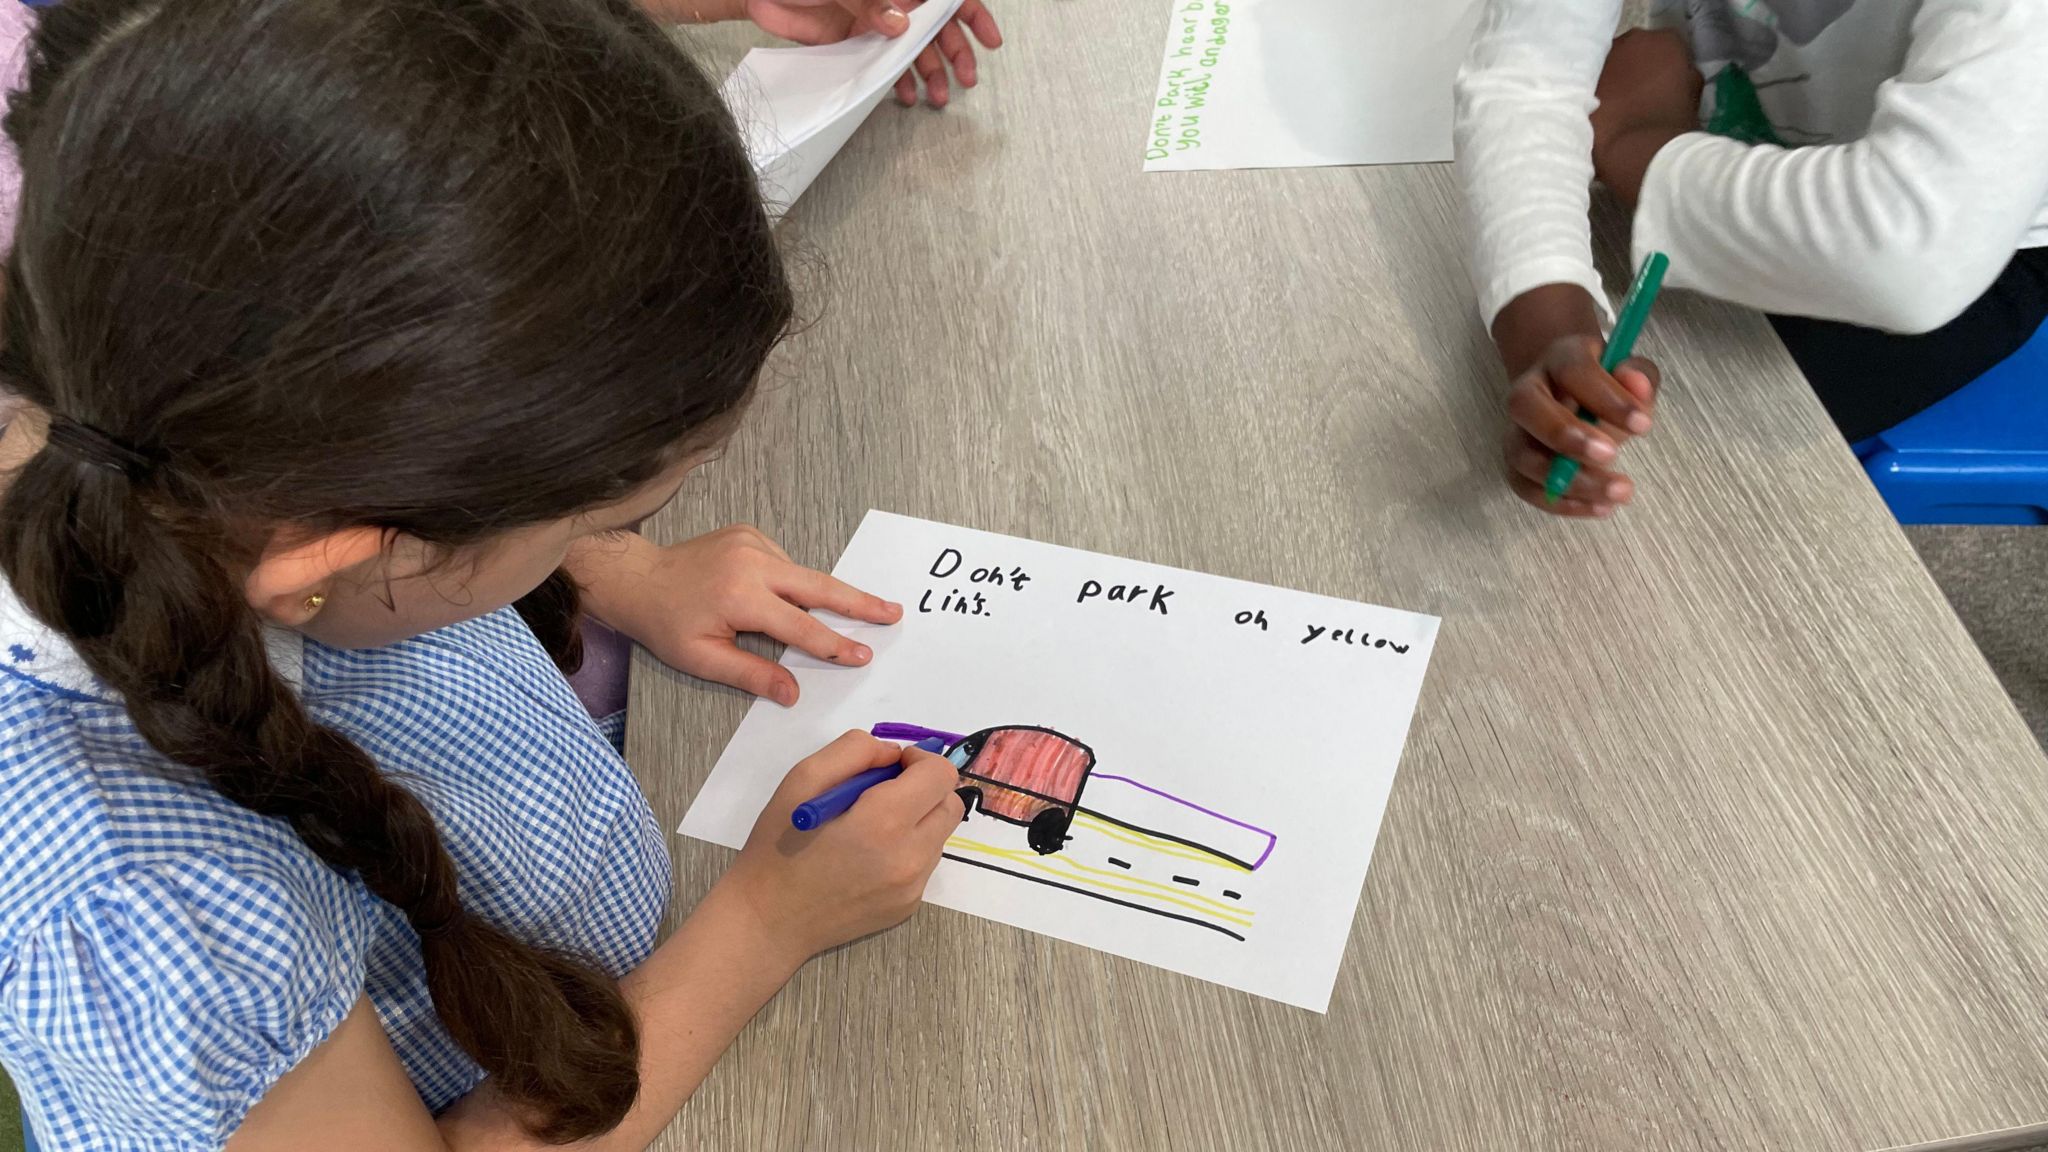 Children making posters inside school